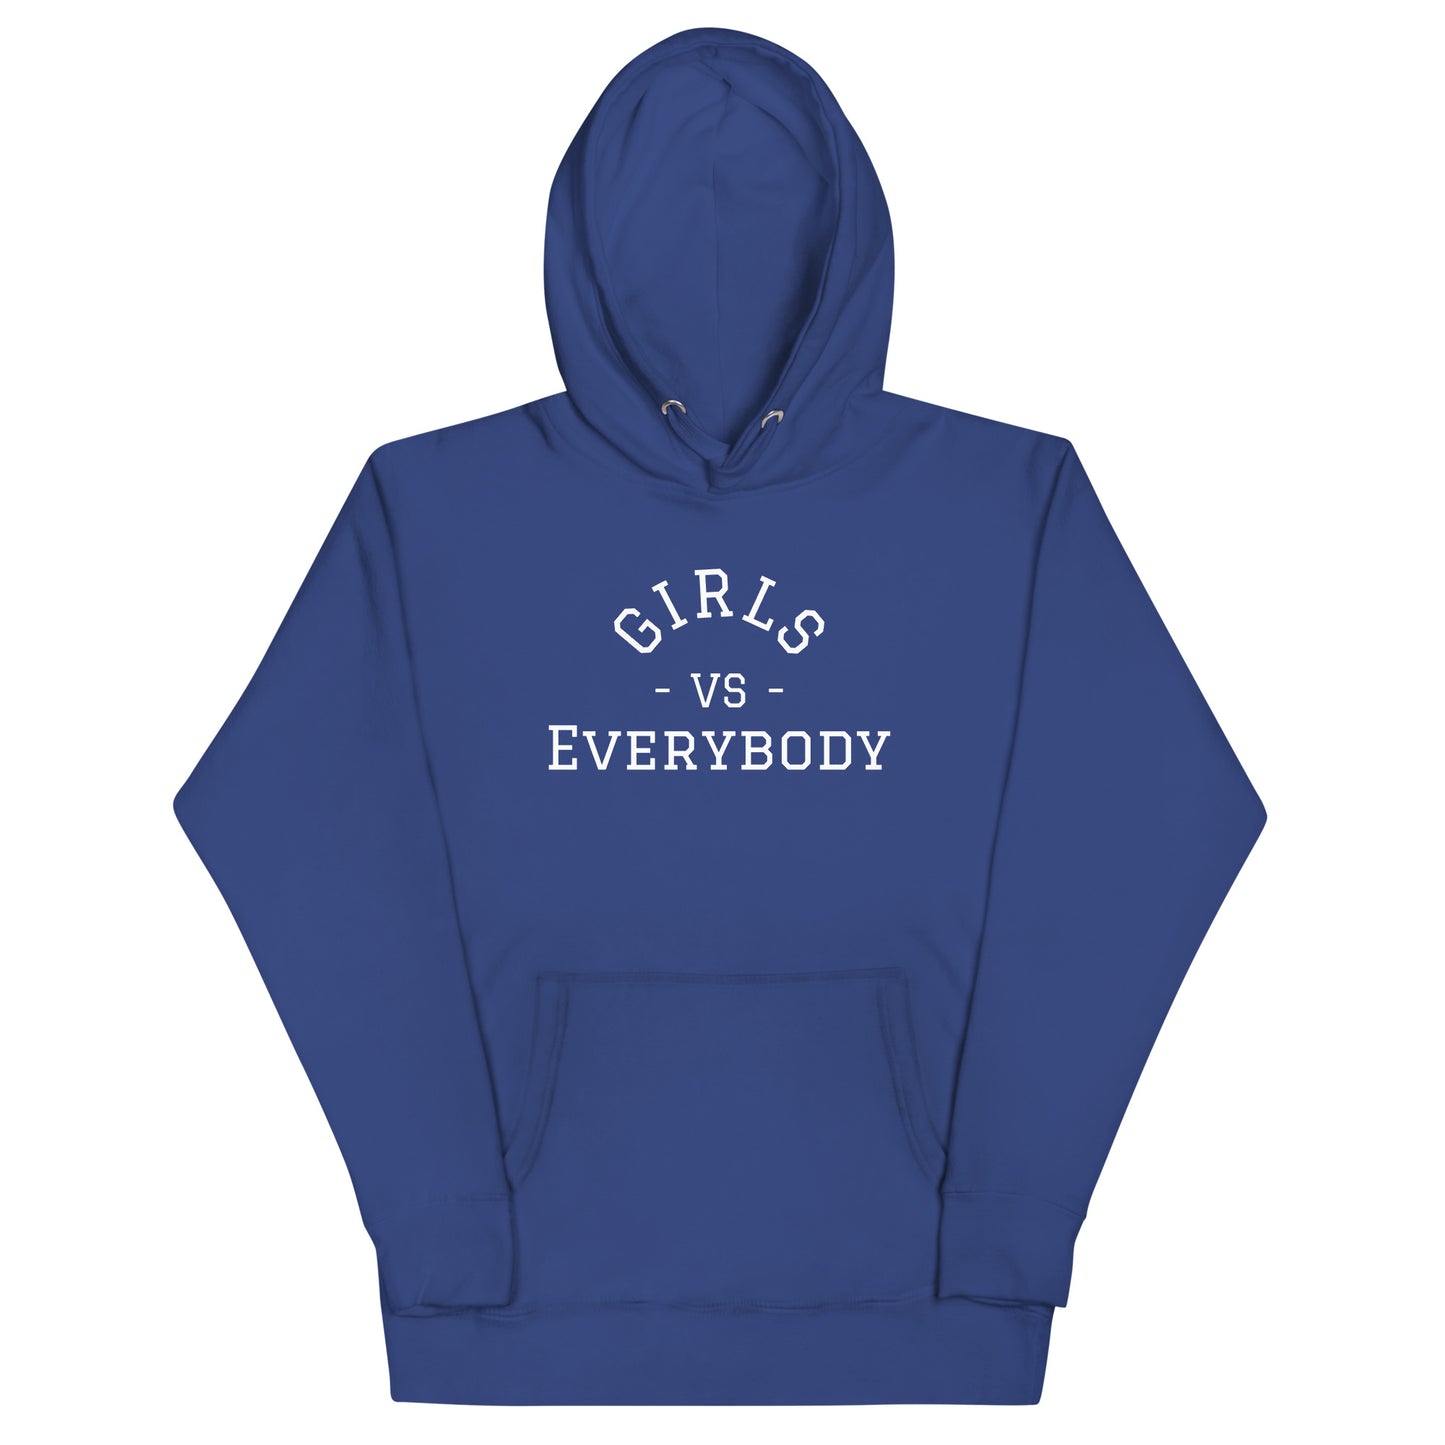 Women's royal blue hoodie sweatshirt that says 'Girls VS Everybody'